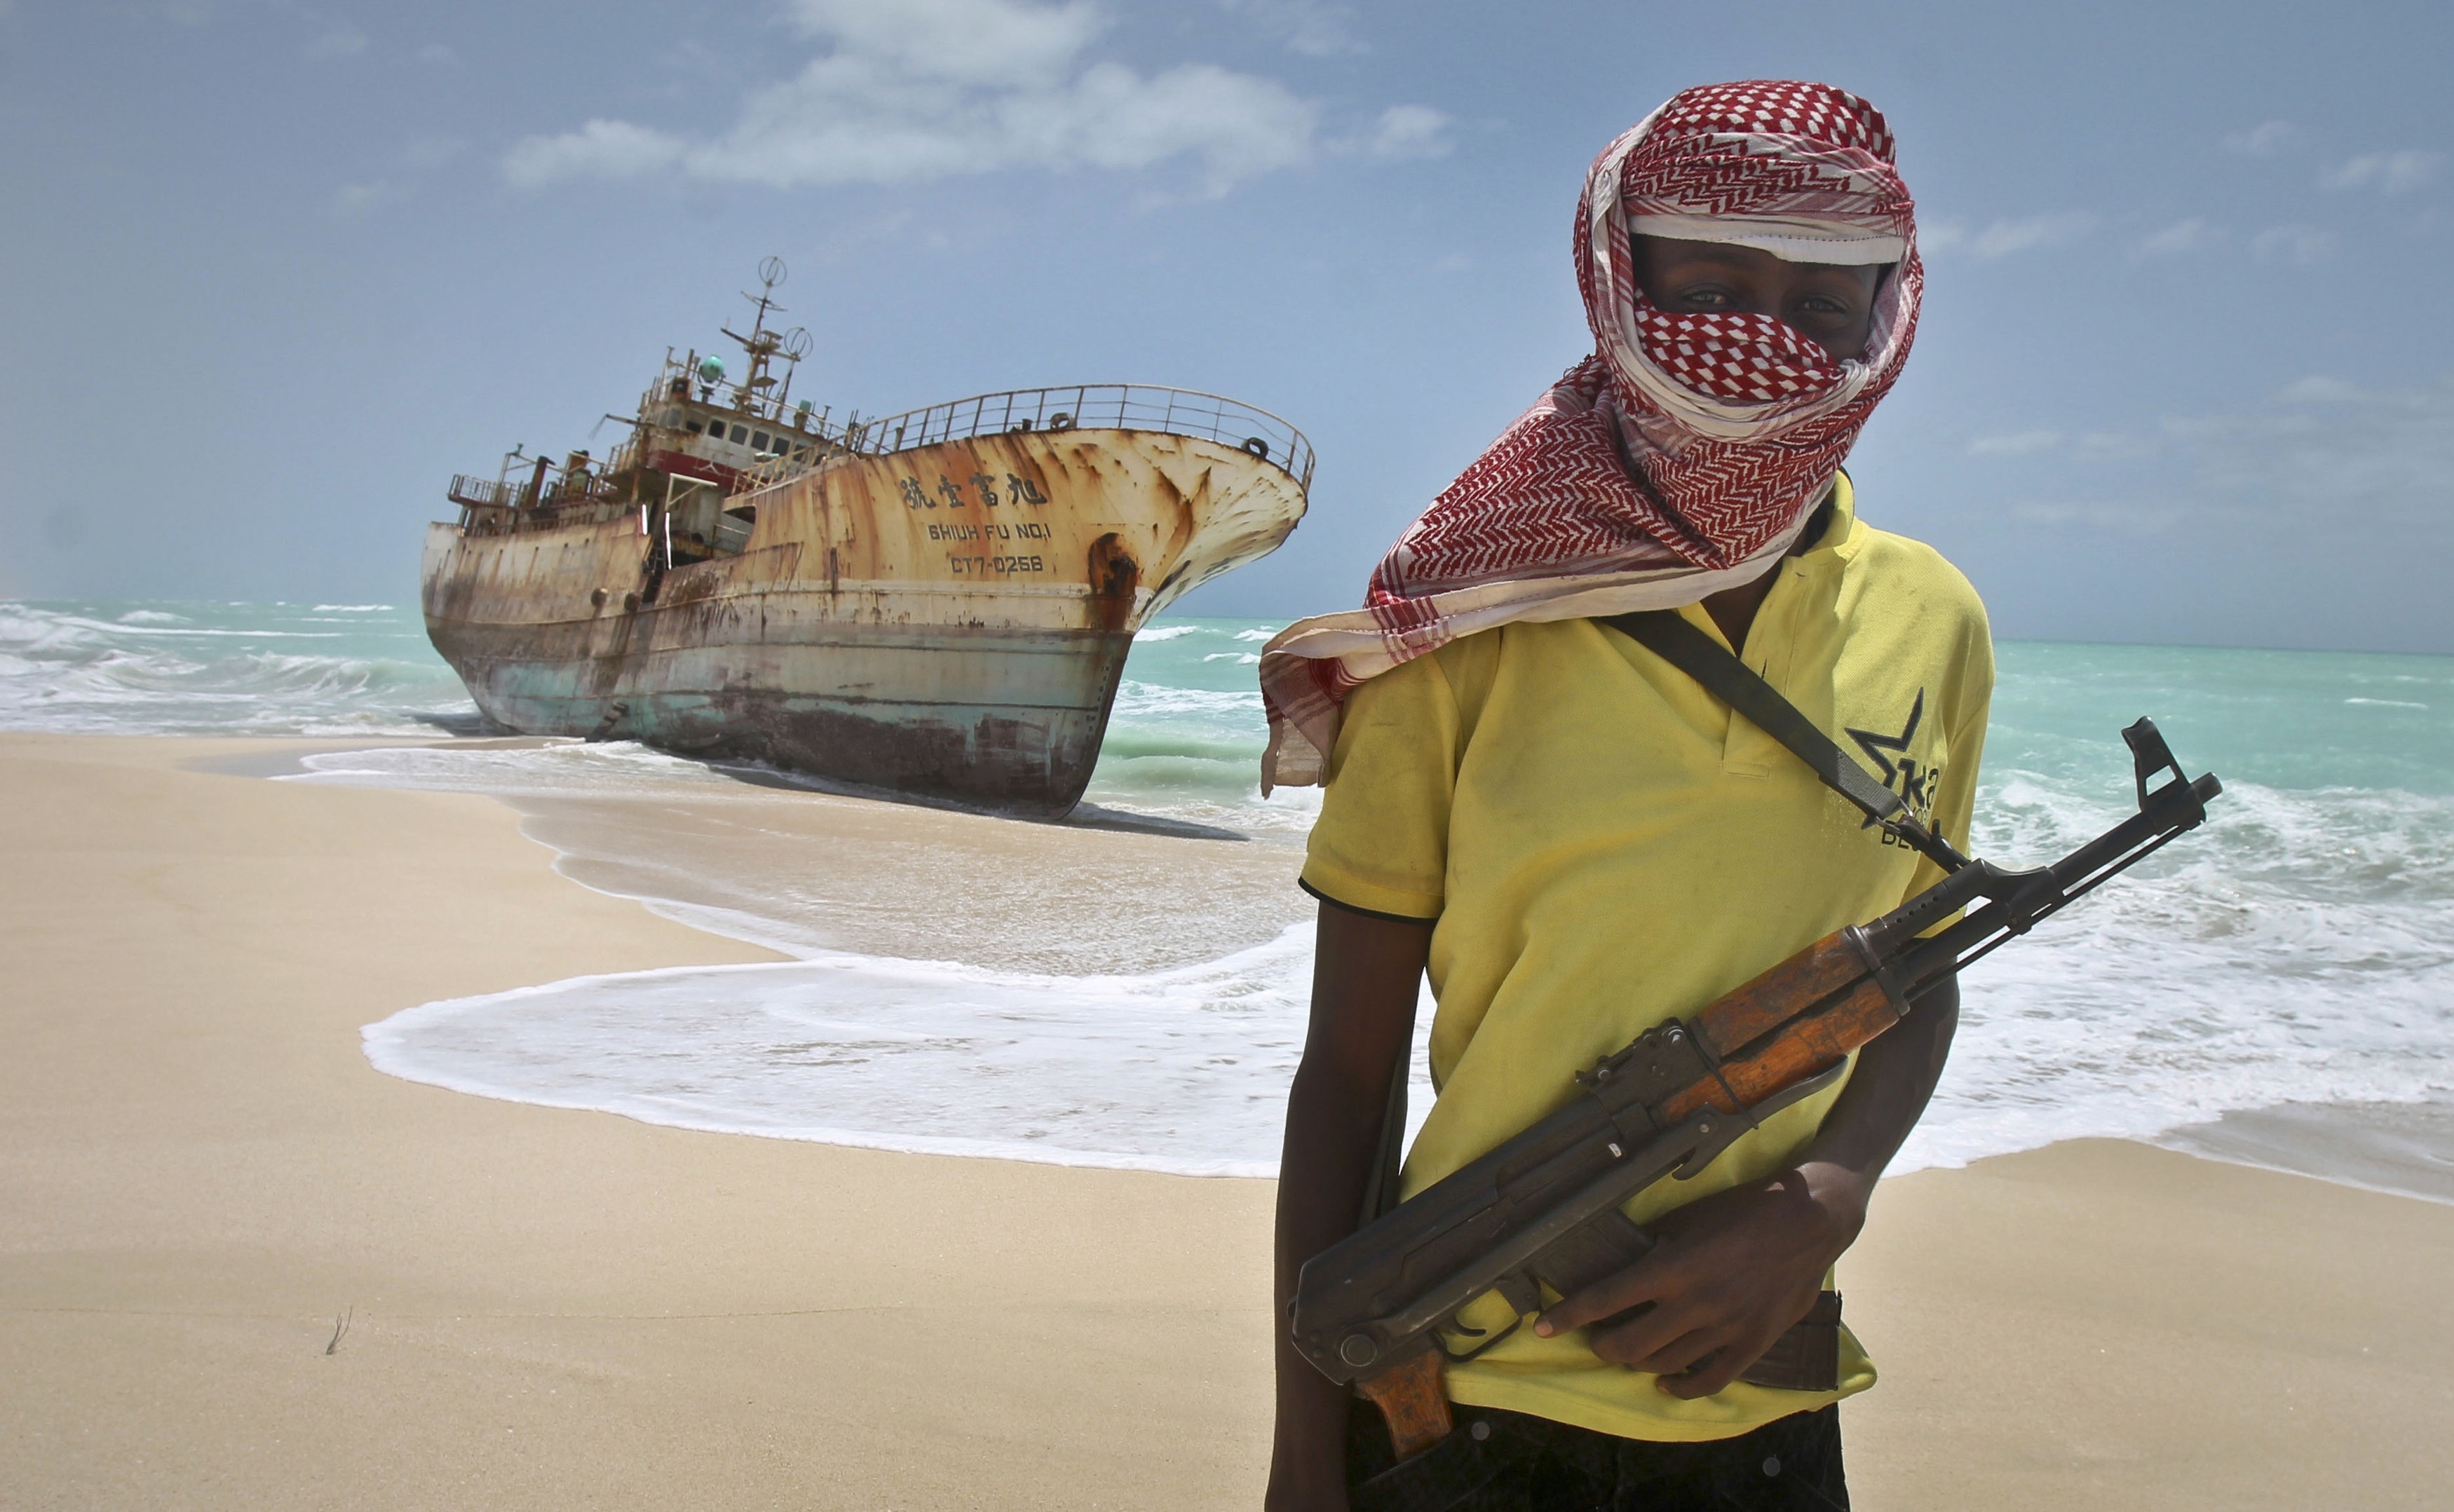 Pirates hijack oil tanker